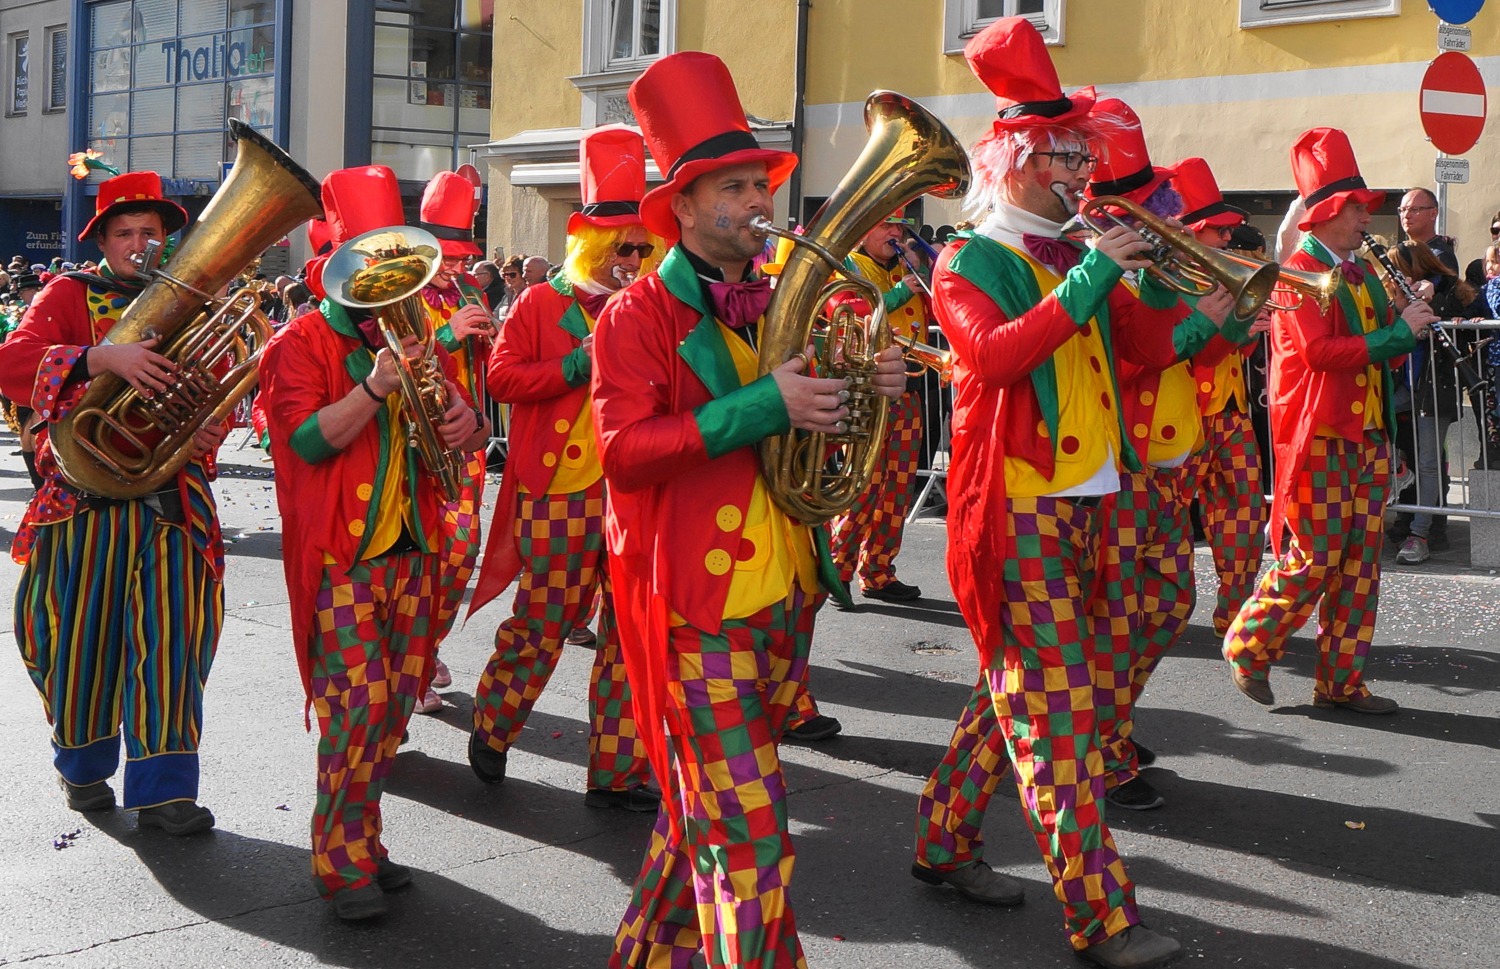 Parade in Music carnival